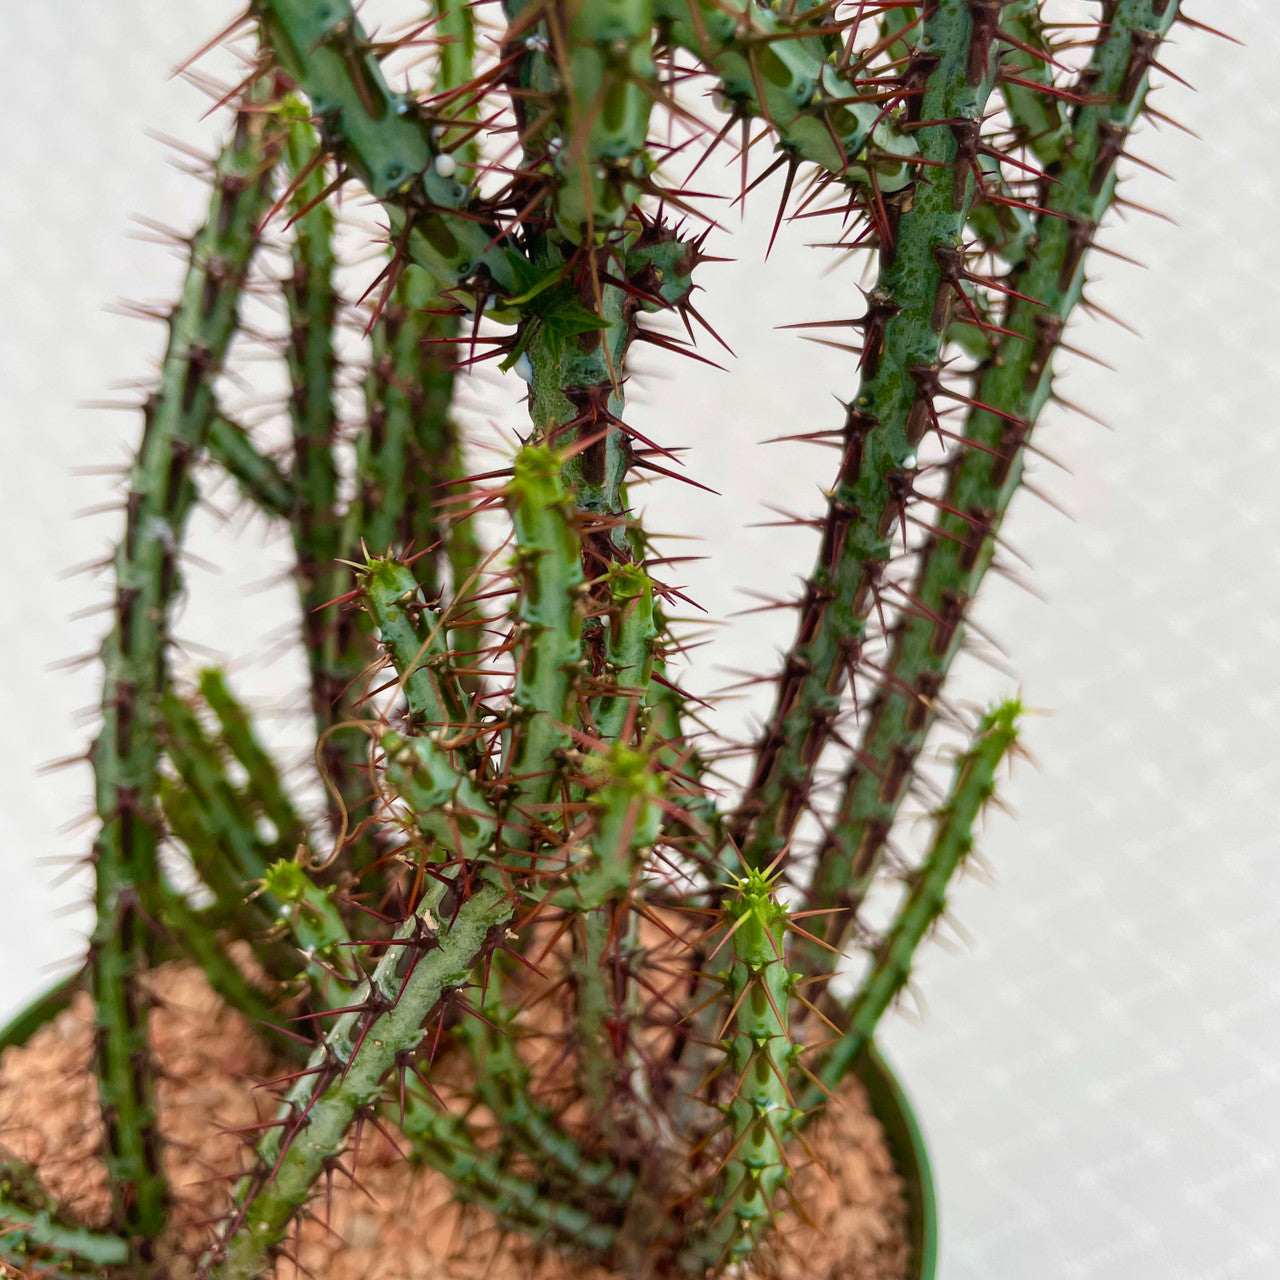 A Euphorbia Aeruginosa Minor close up to show detail